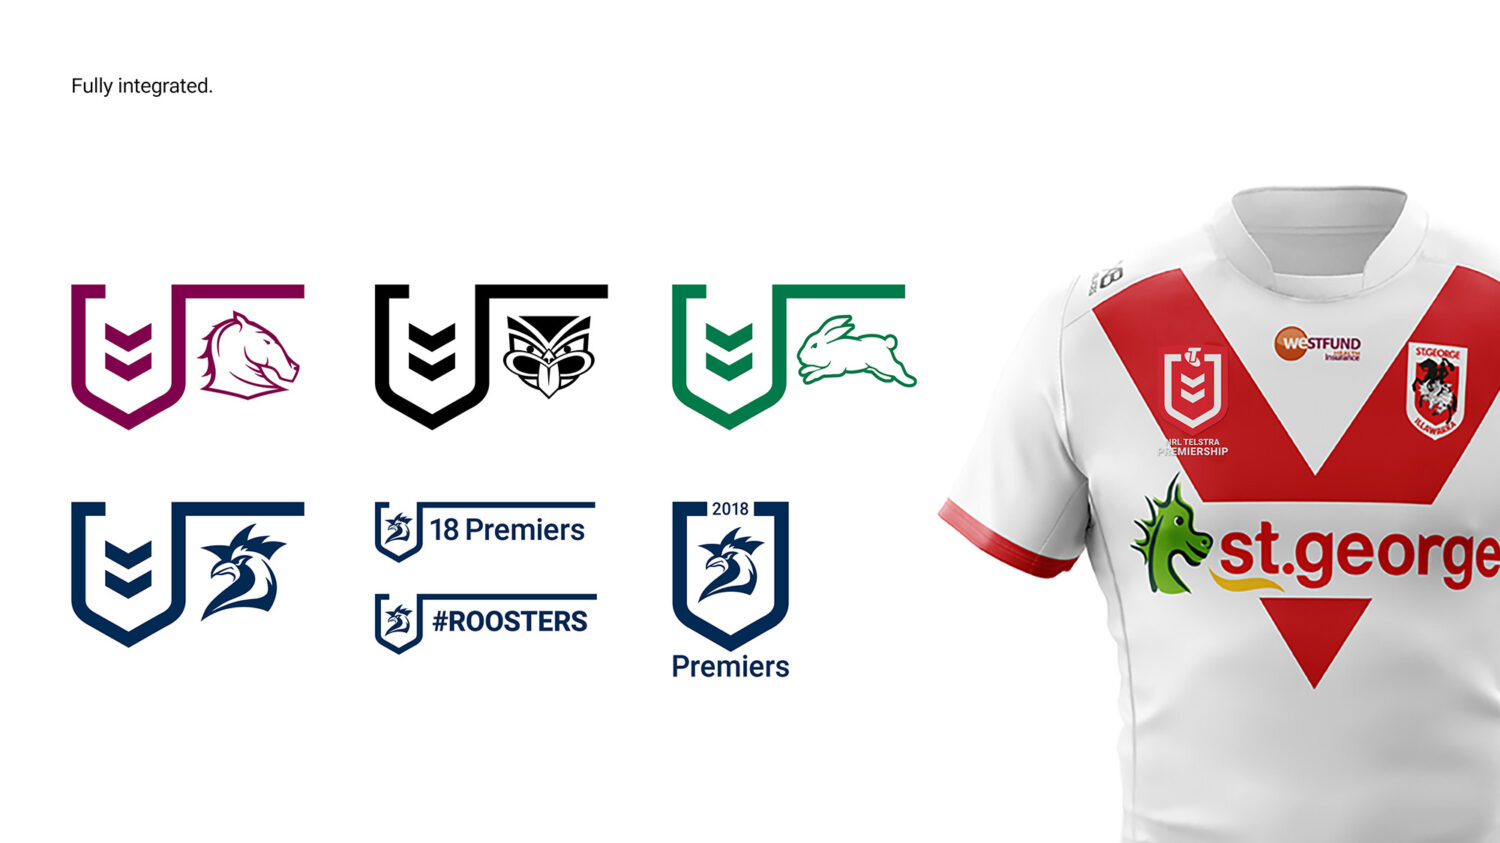 Telstra Premiership Brand, Quelle: NRL